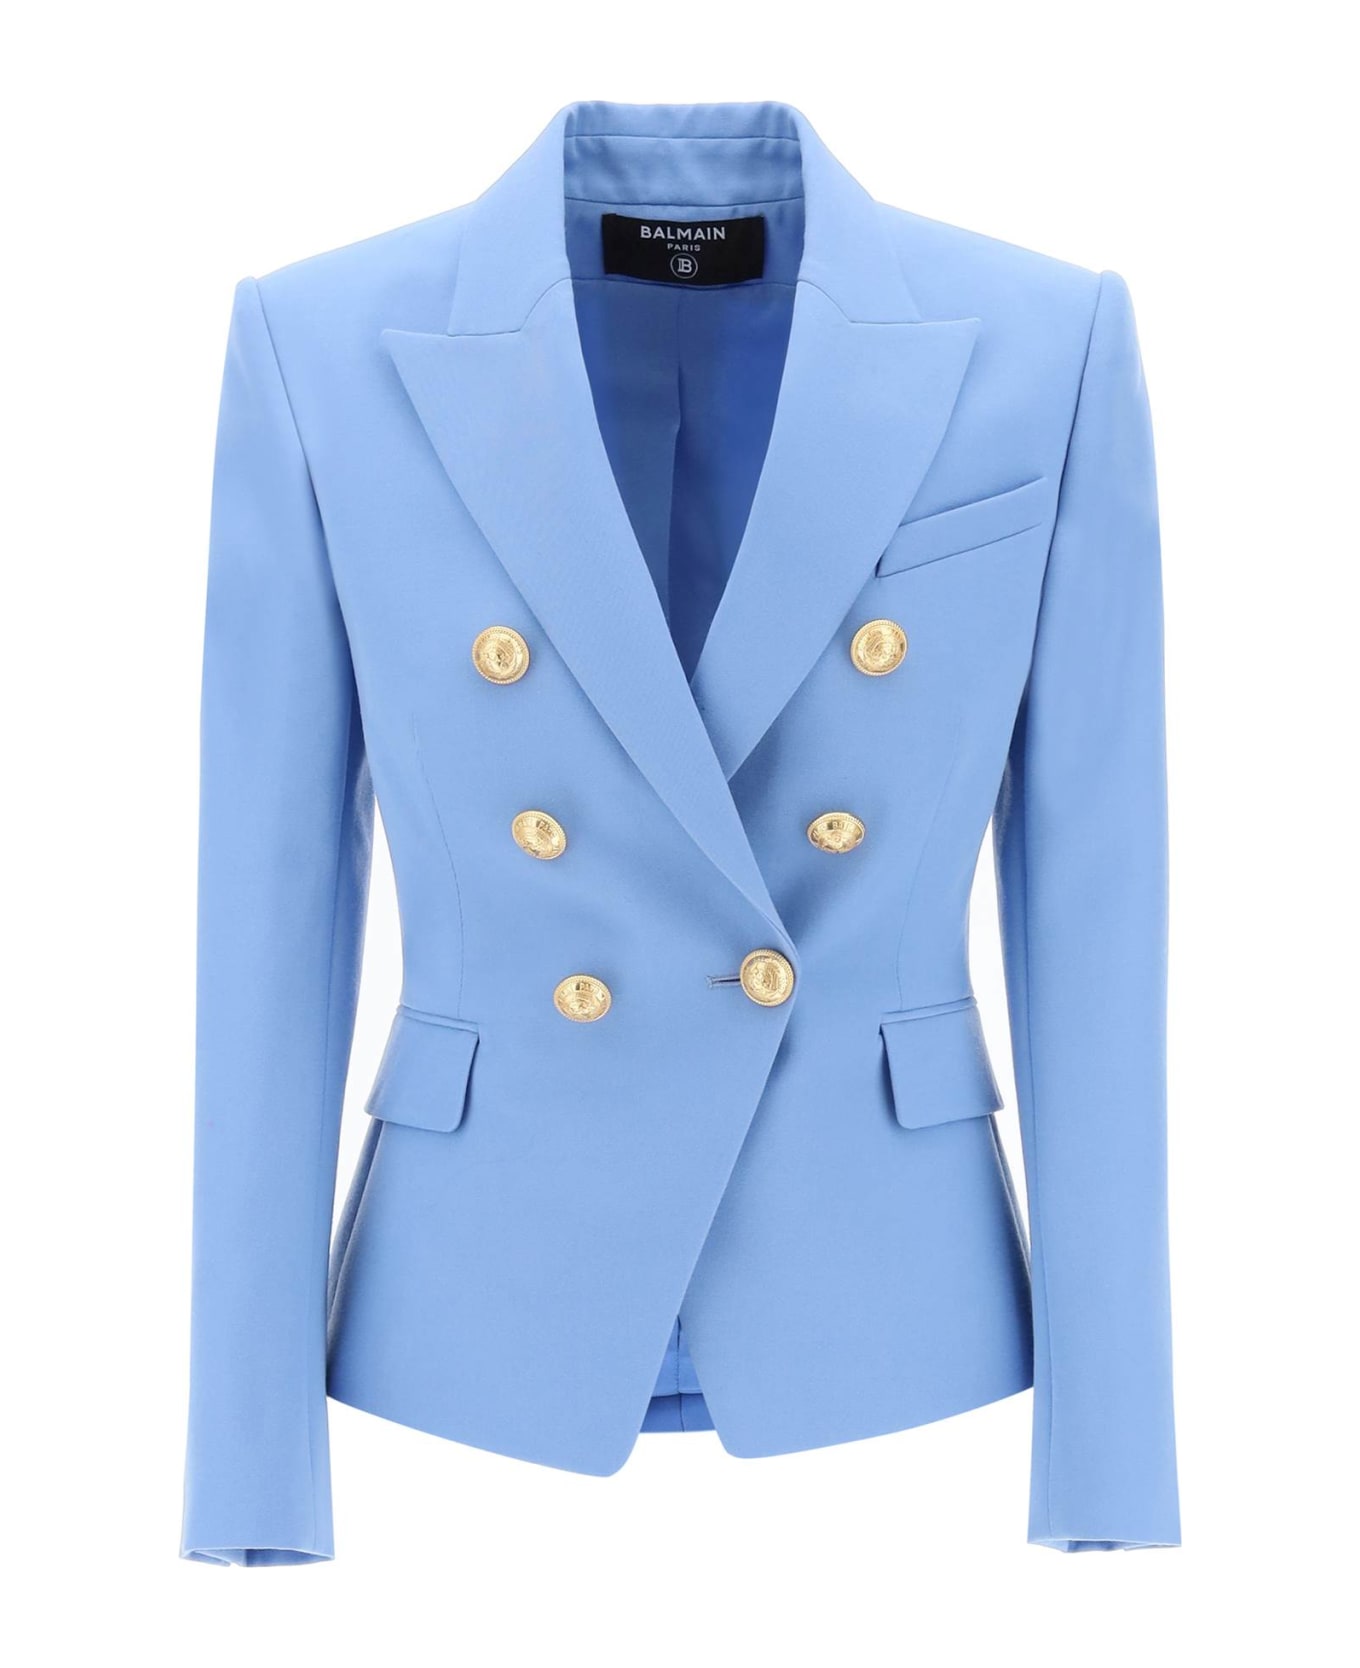 Balmain Double-breasted Jacket - BLEU CIEL (Light blue)